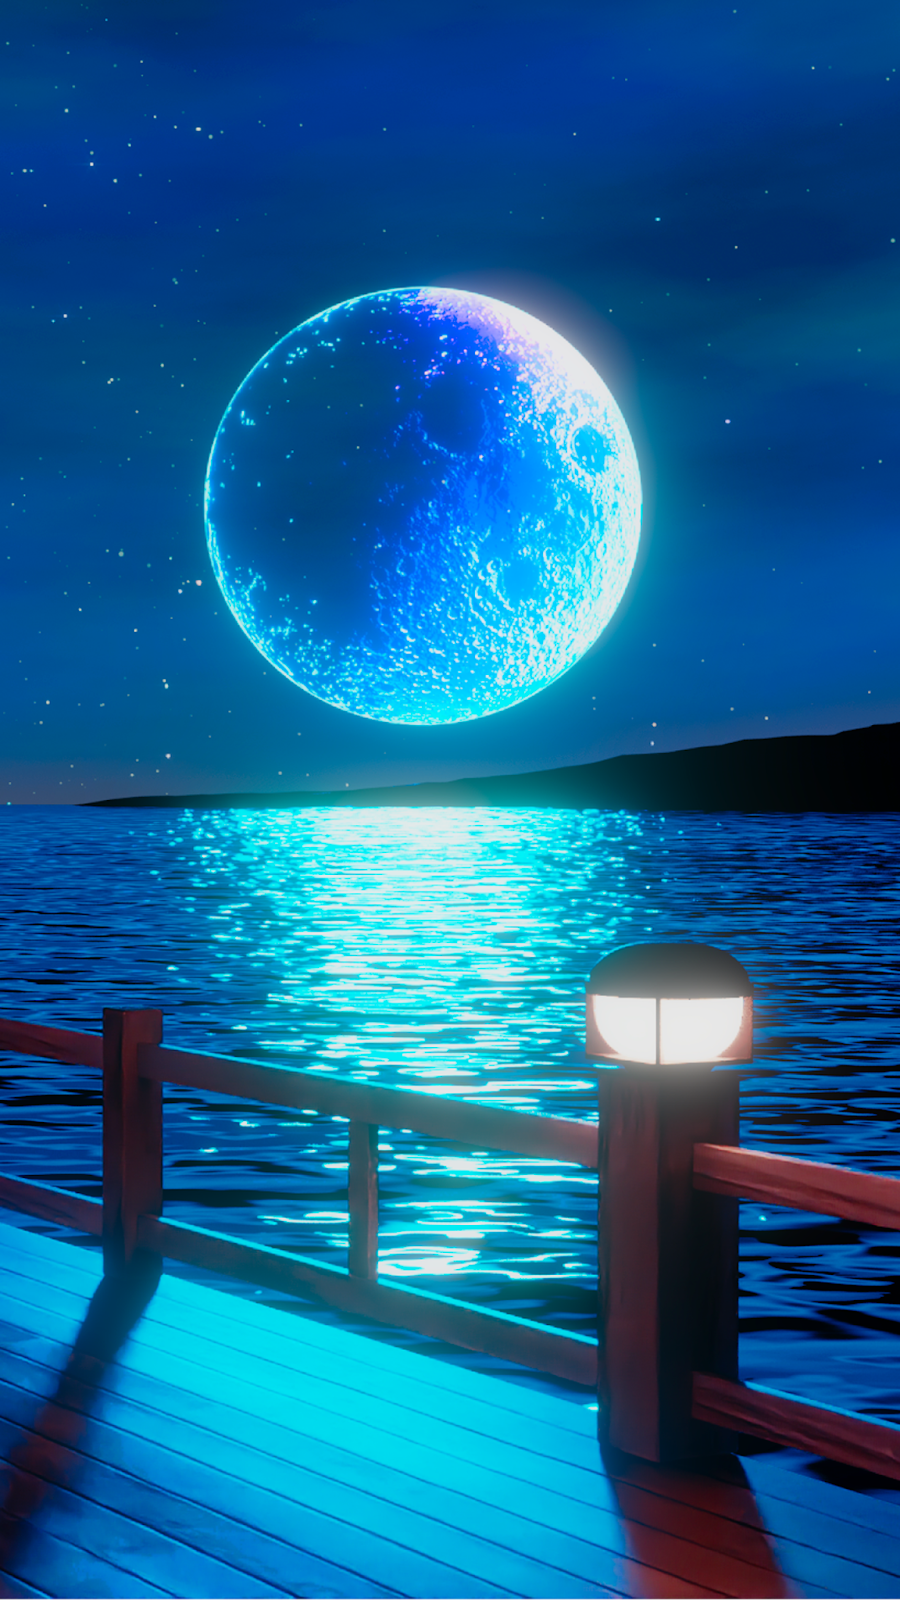 Full moon of the night